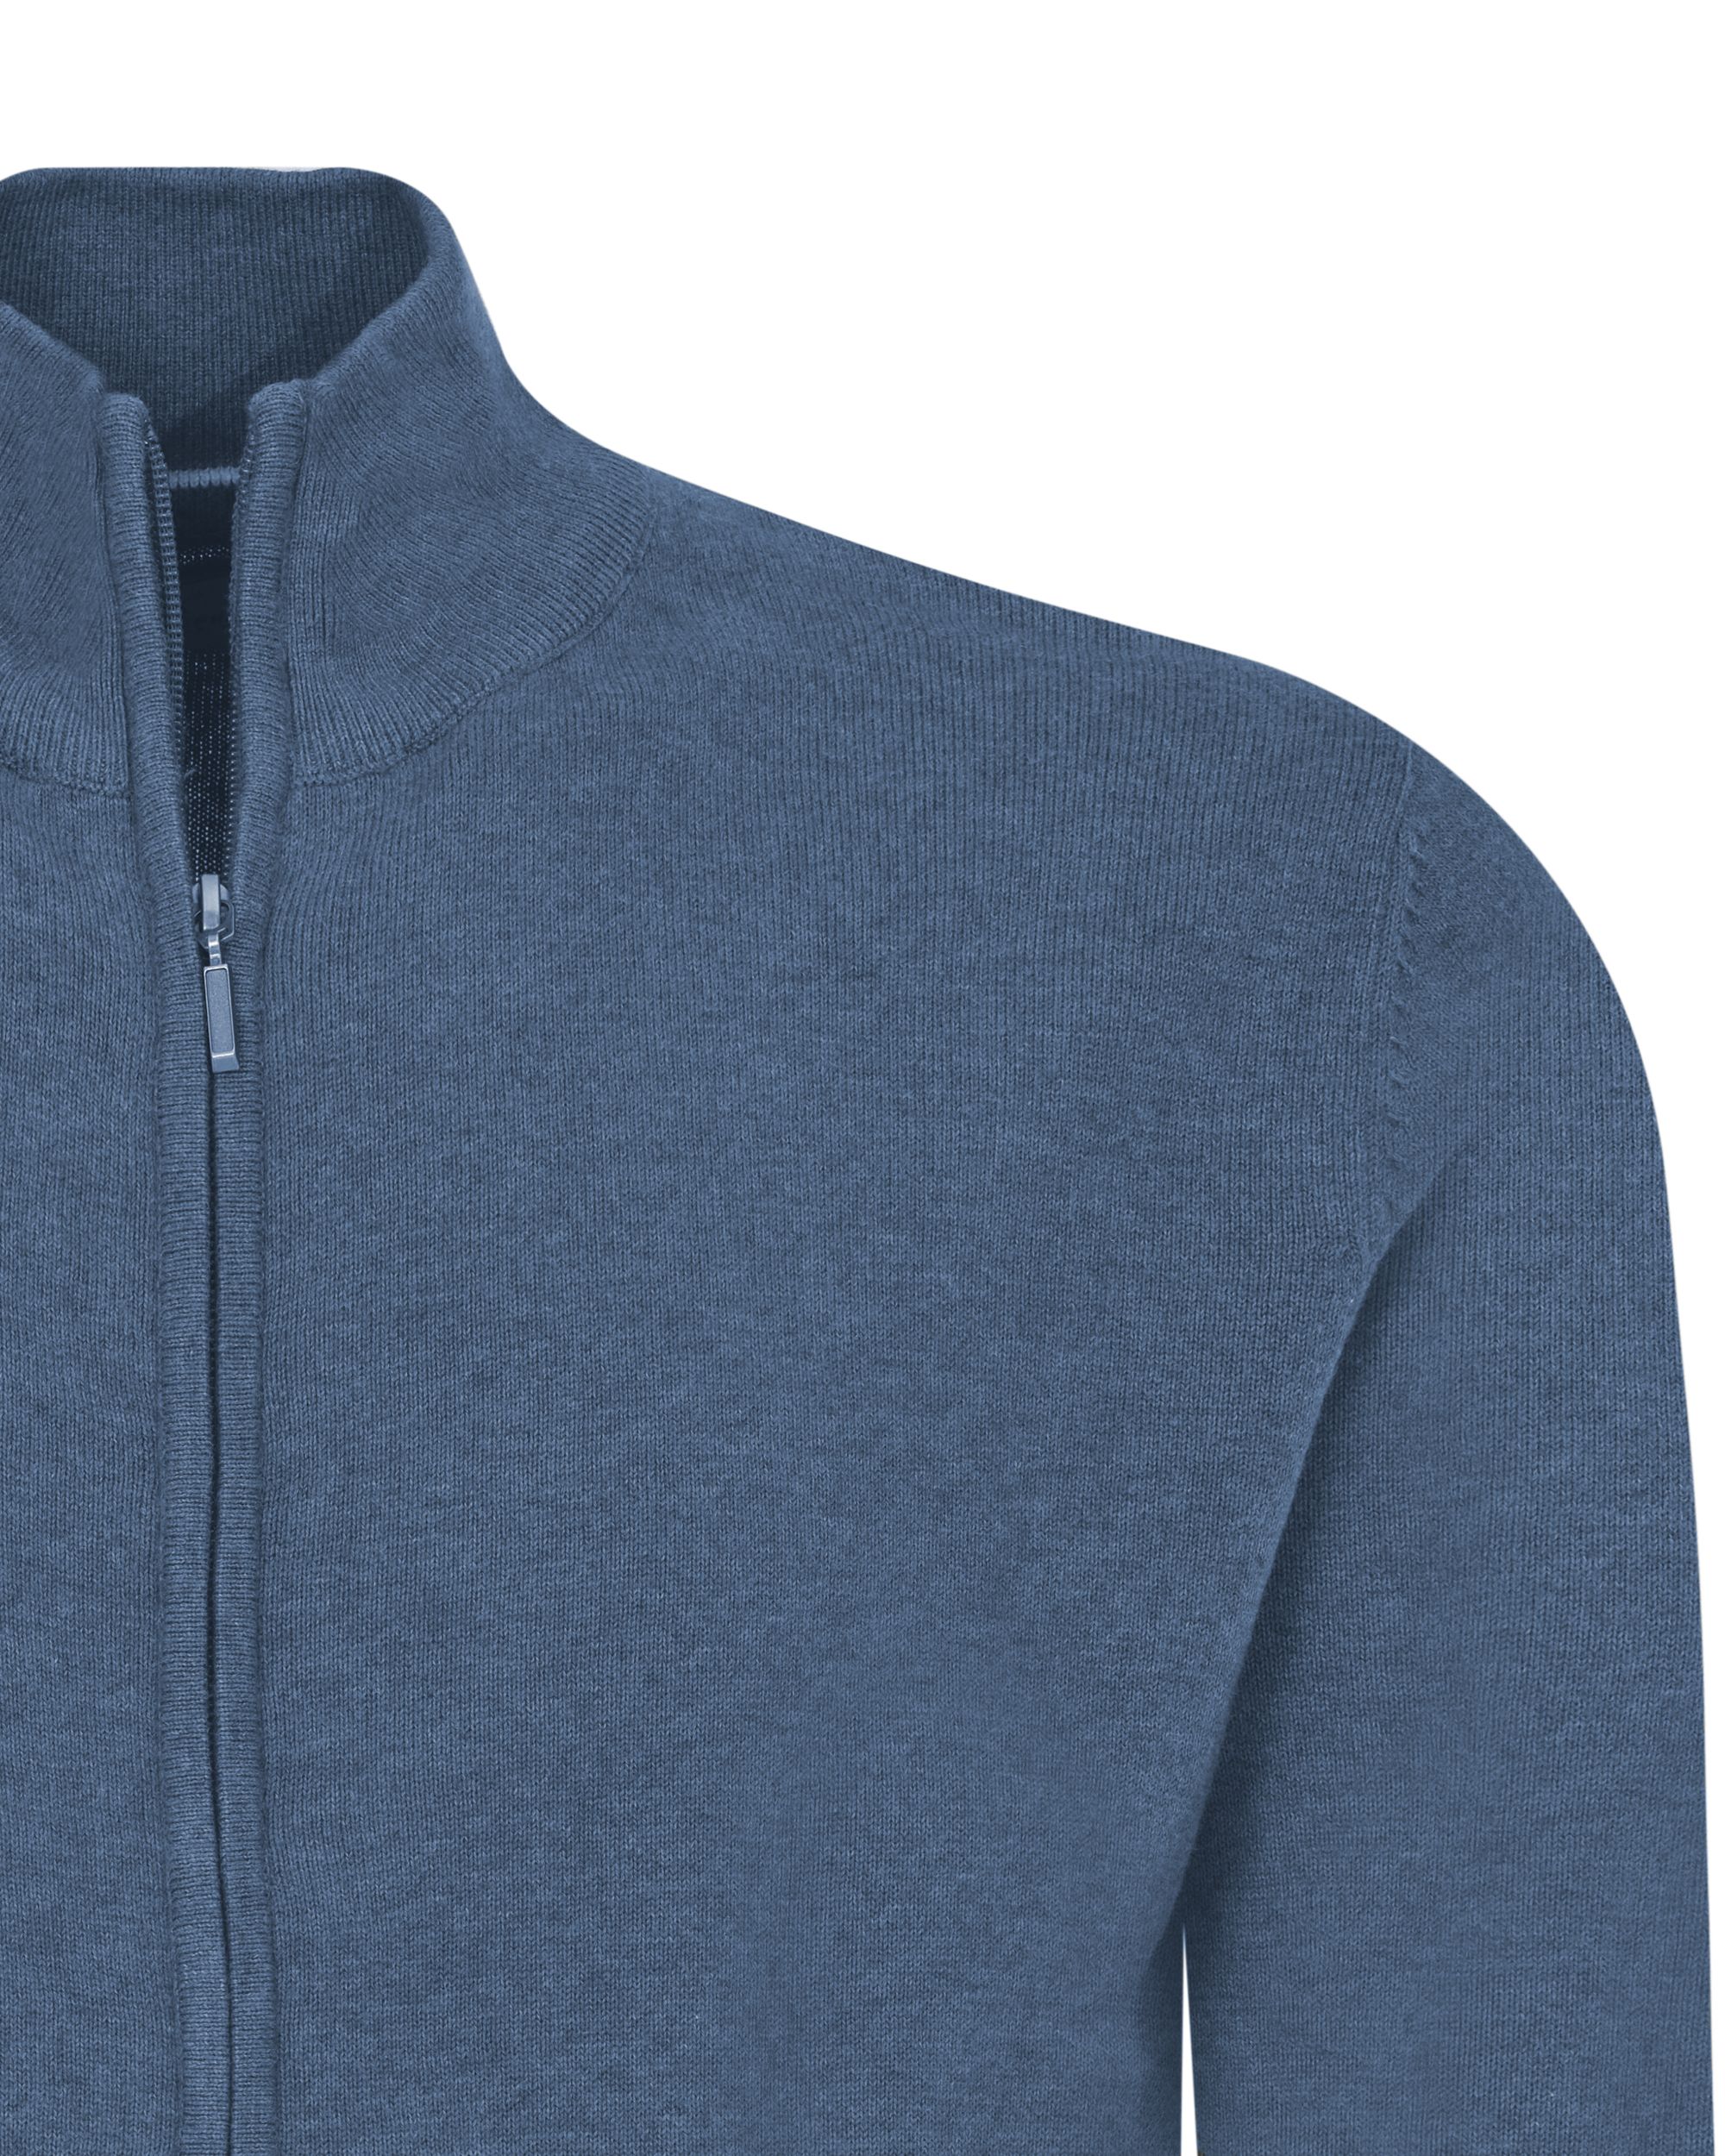 The BLUEPRINT Premium Vest Blauw uni 078480-003-L